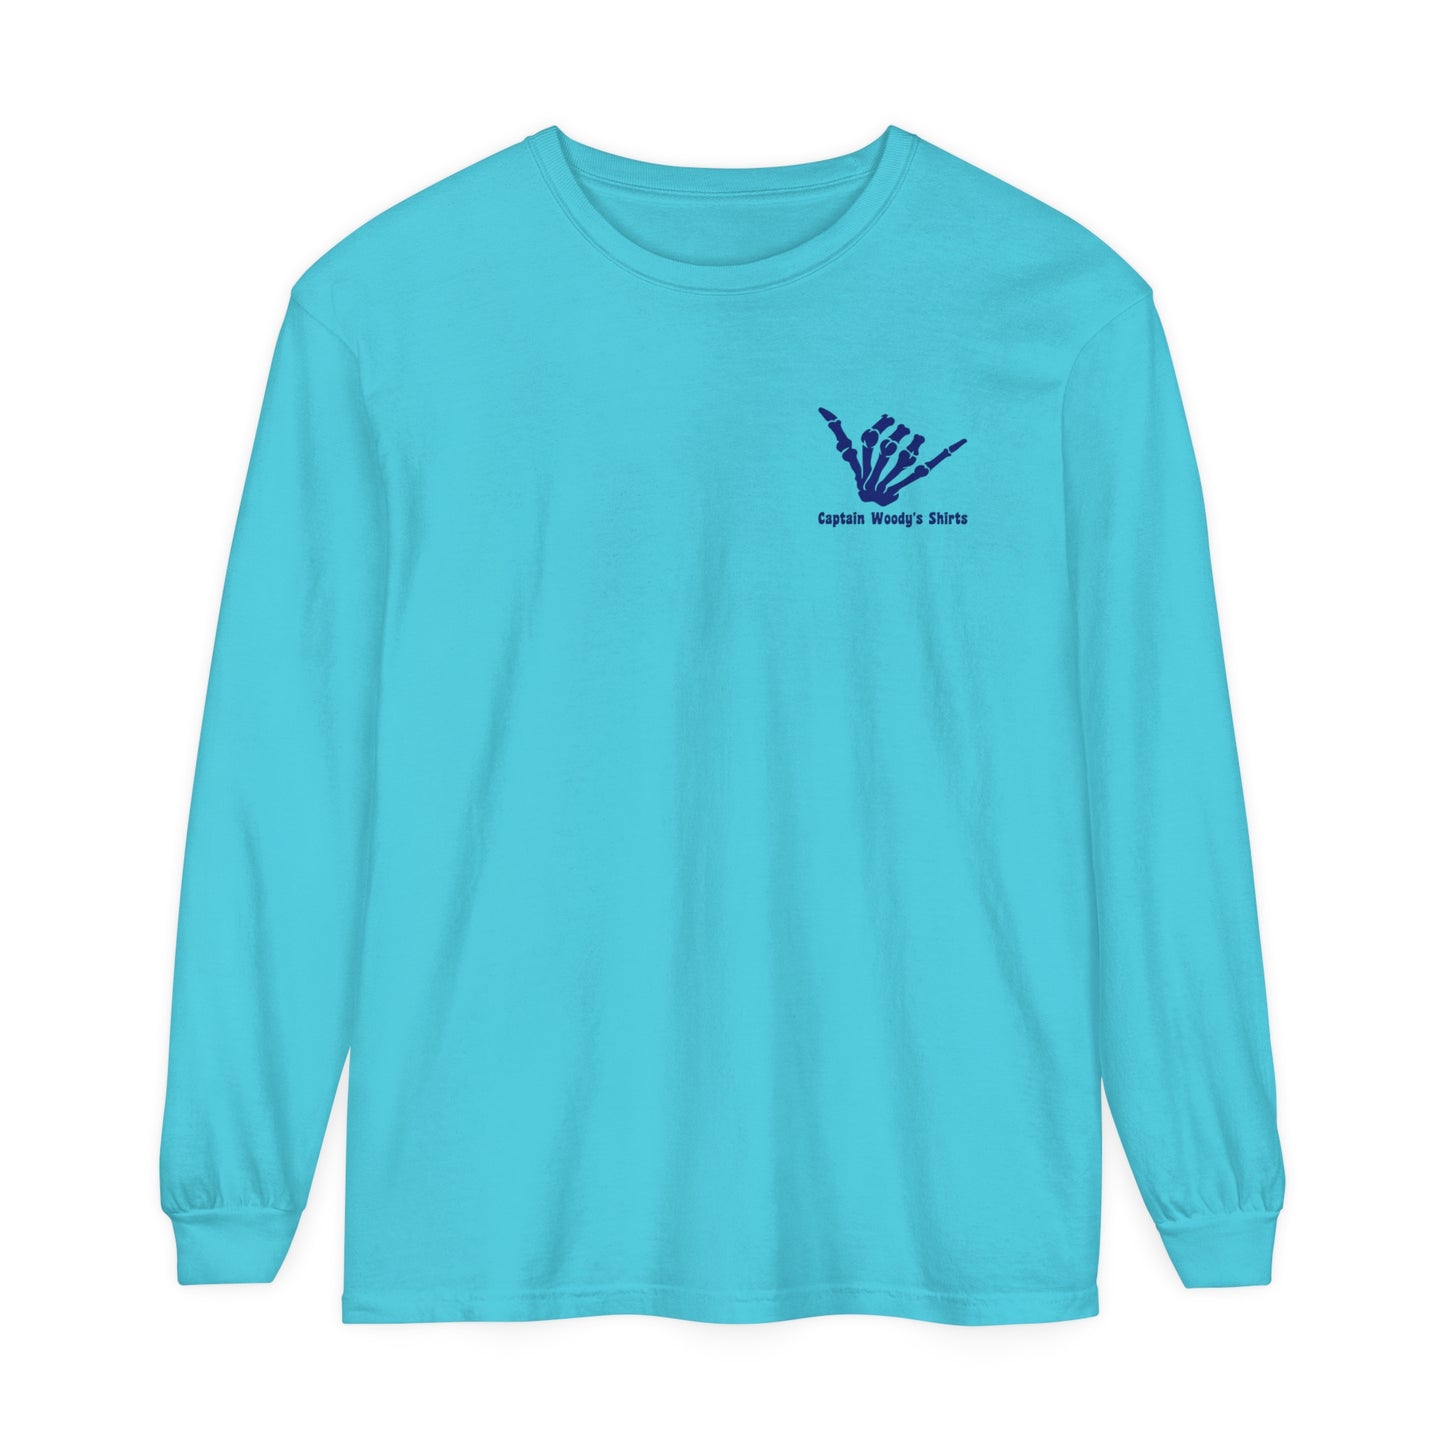 Get Wet Unisex Long Sleeve Comfort Colors T-Shirt